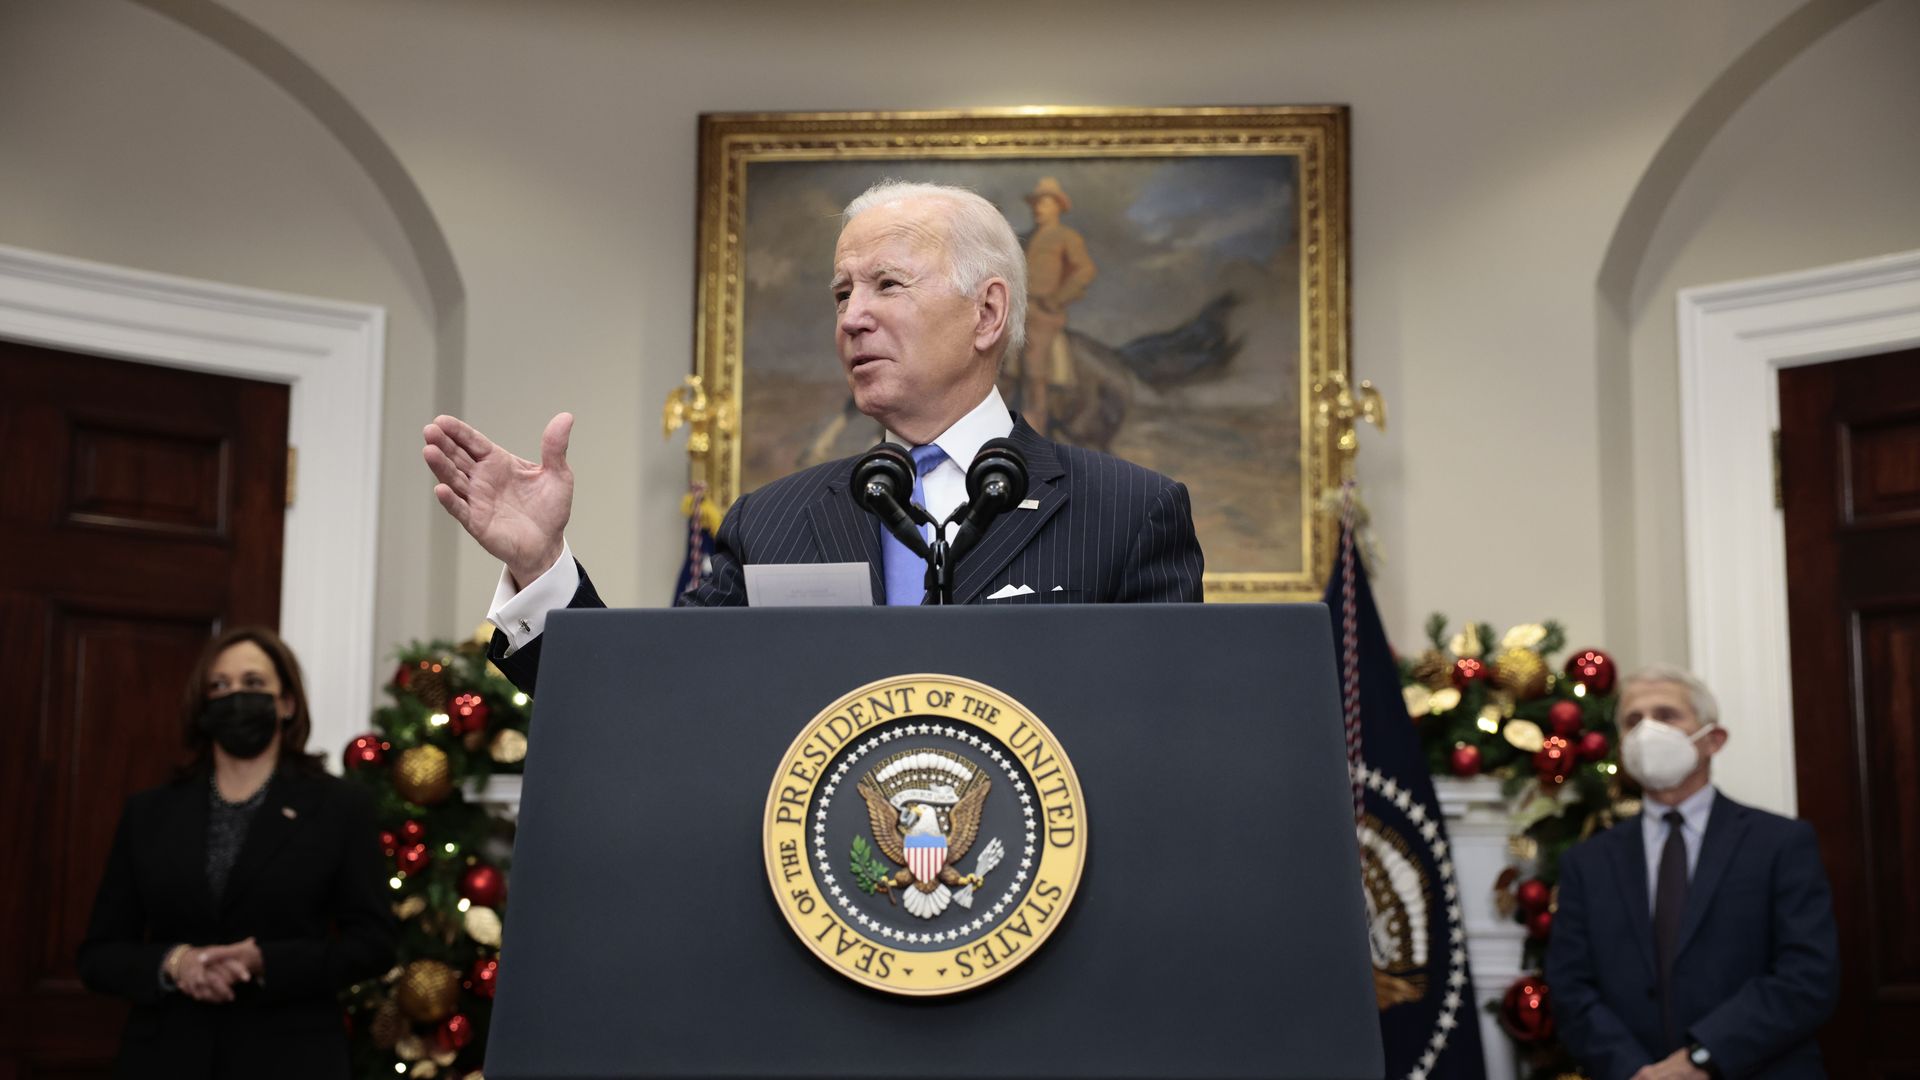 Photo of Joe Biden speaking from a podium